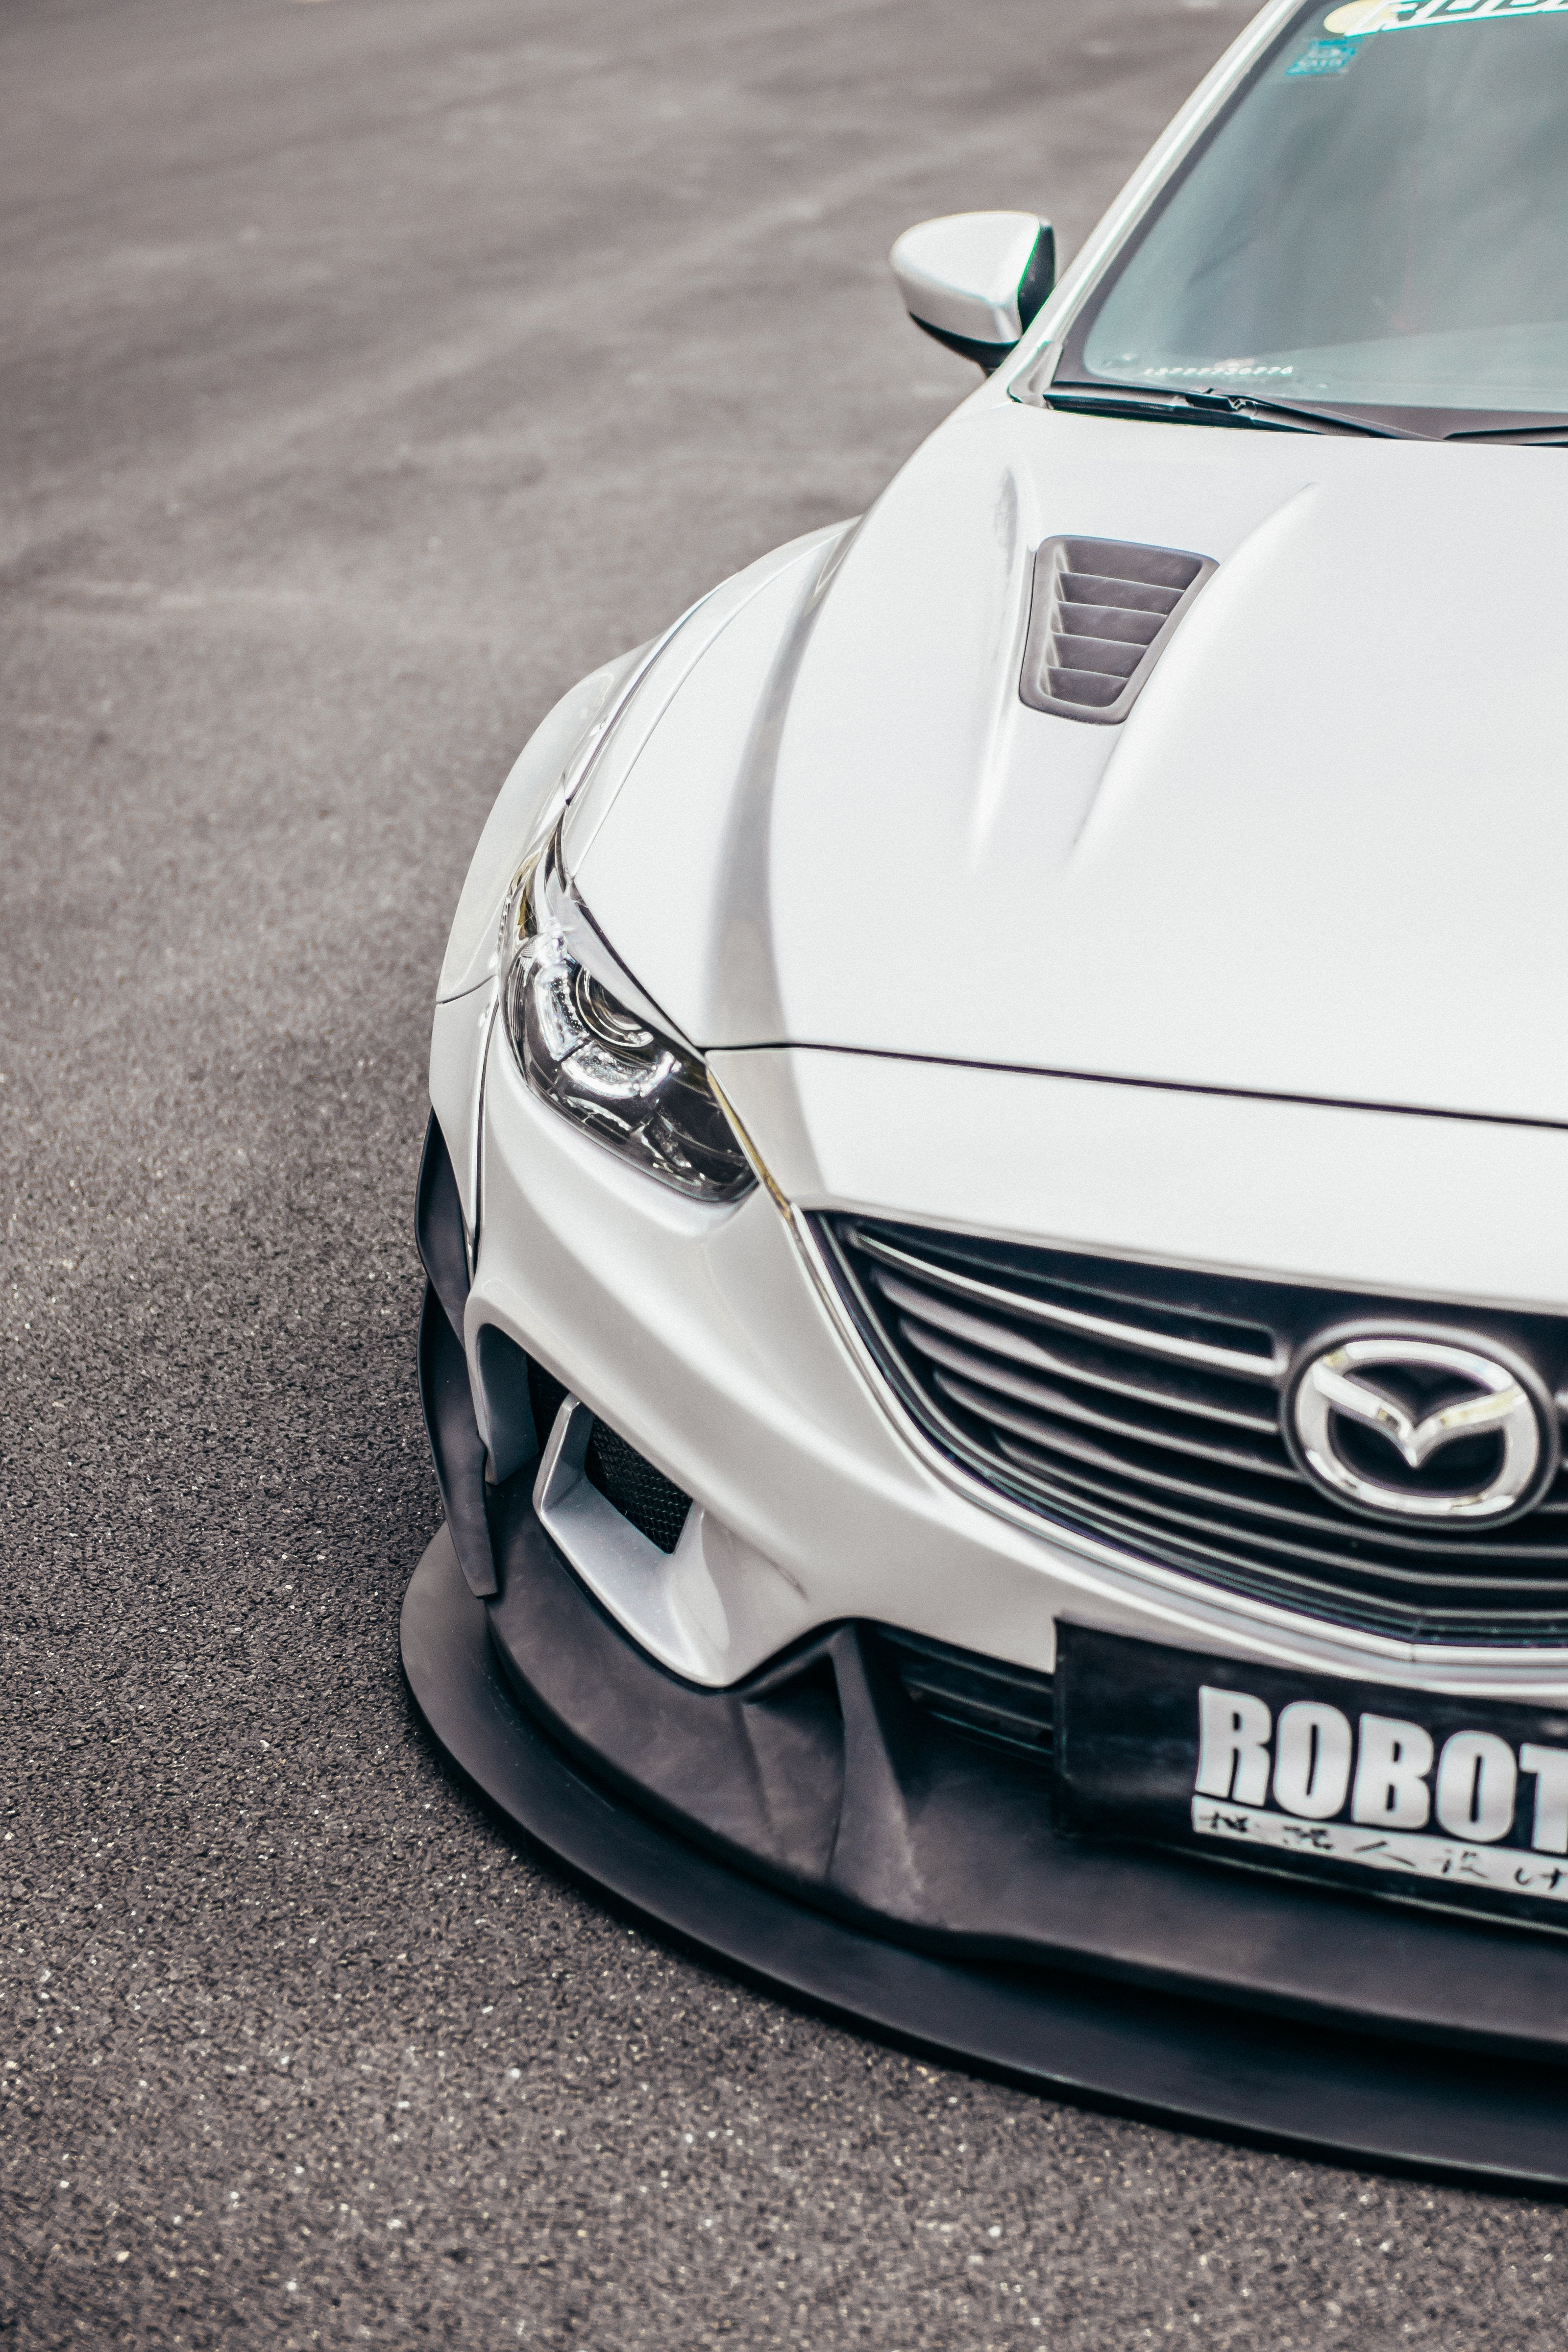 ROBOT CRAFTSMAN Carbon Fiber Widebody Kit For Mazda 6 2014-2017